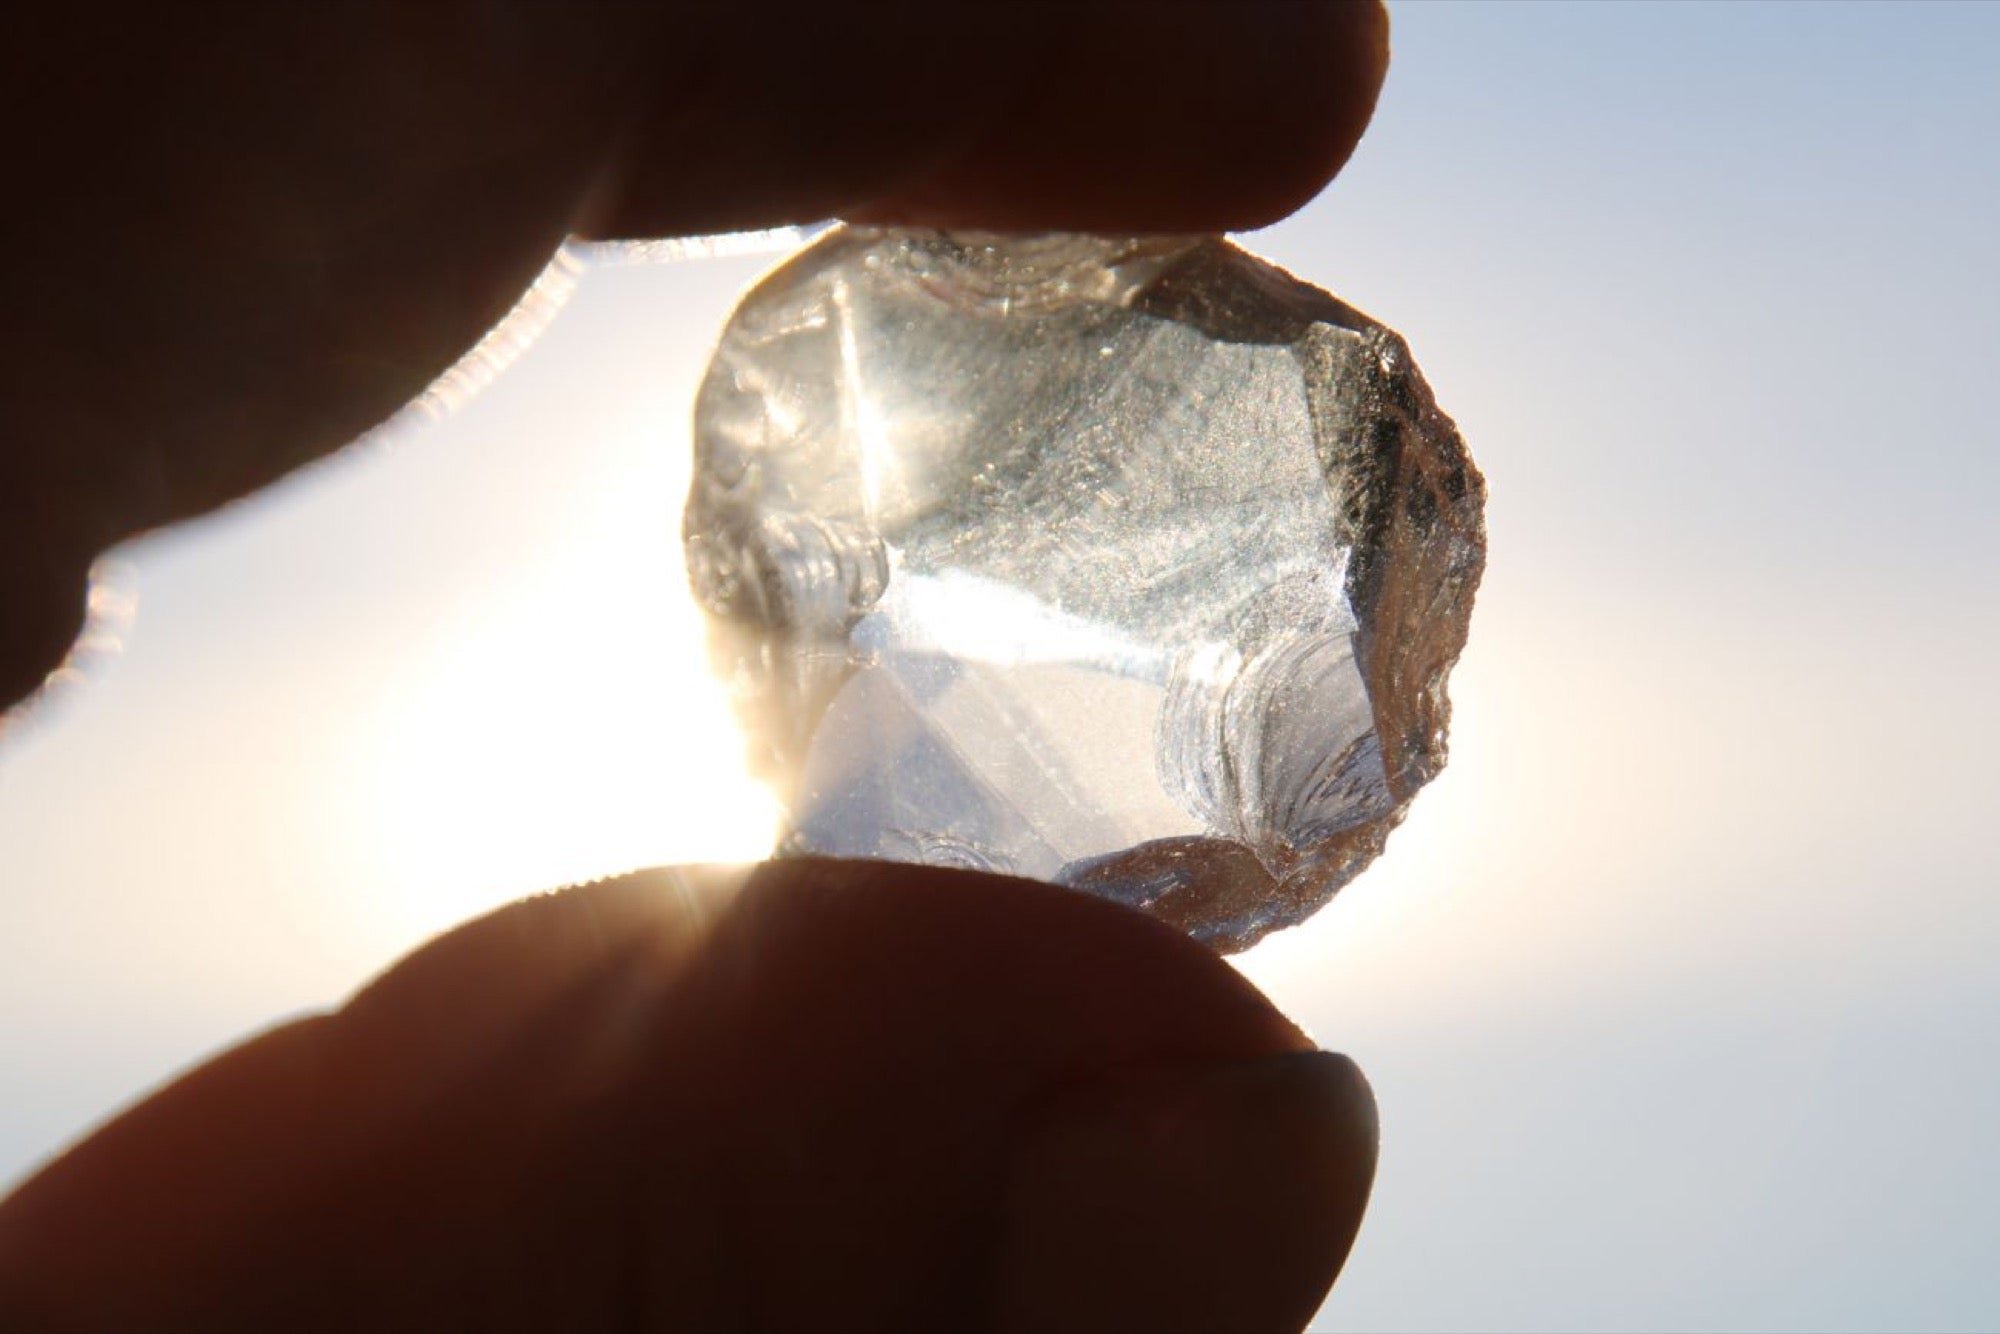 Full crystal. Алмаз неограненный камень. Алмаз Кристалл неограненный. Алмаз самородок. Алмаз минерал необработанный.